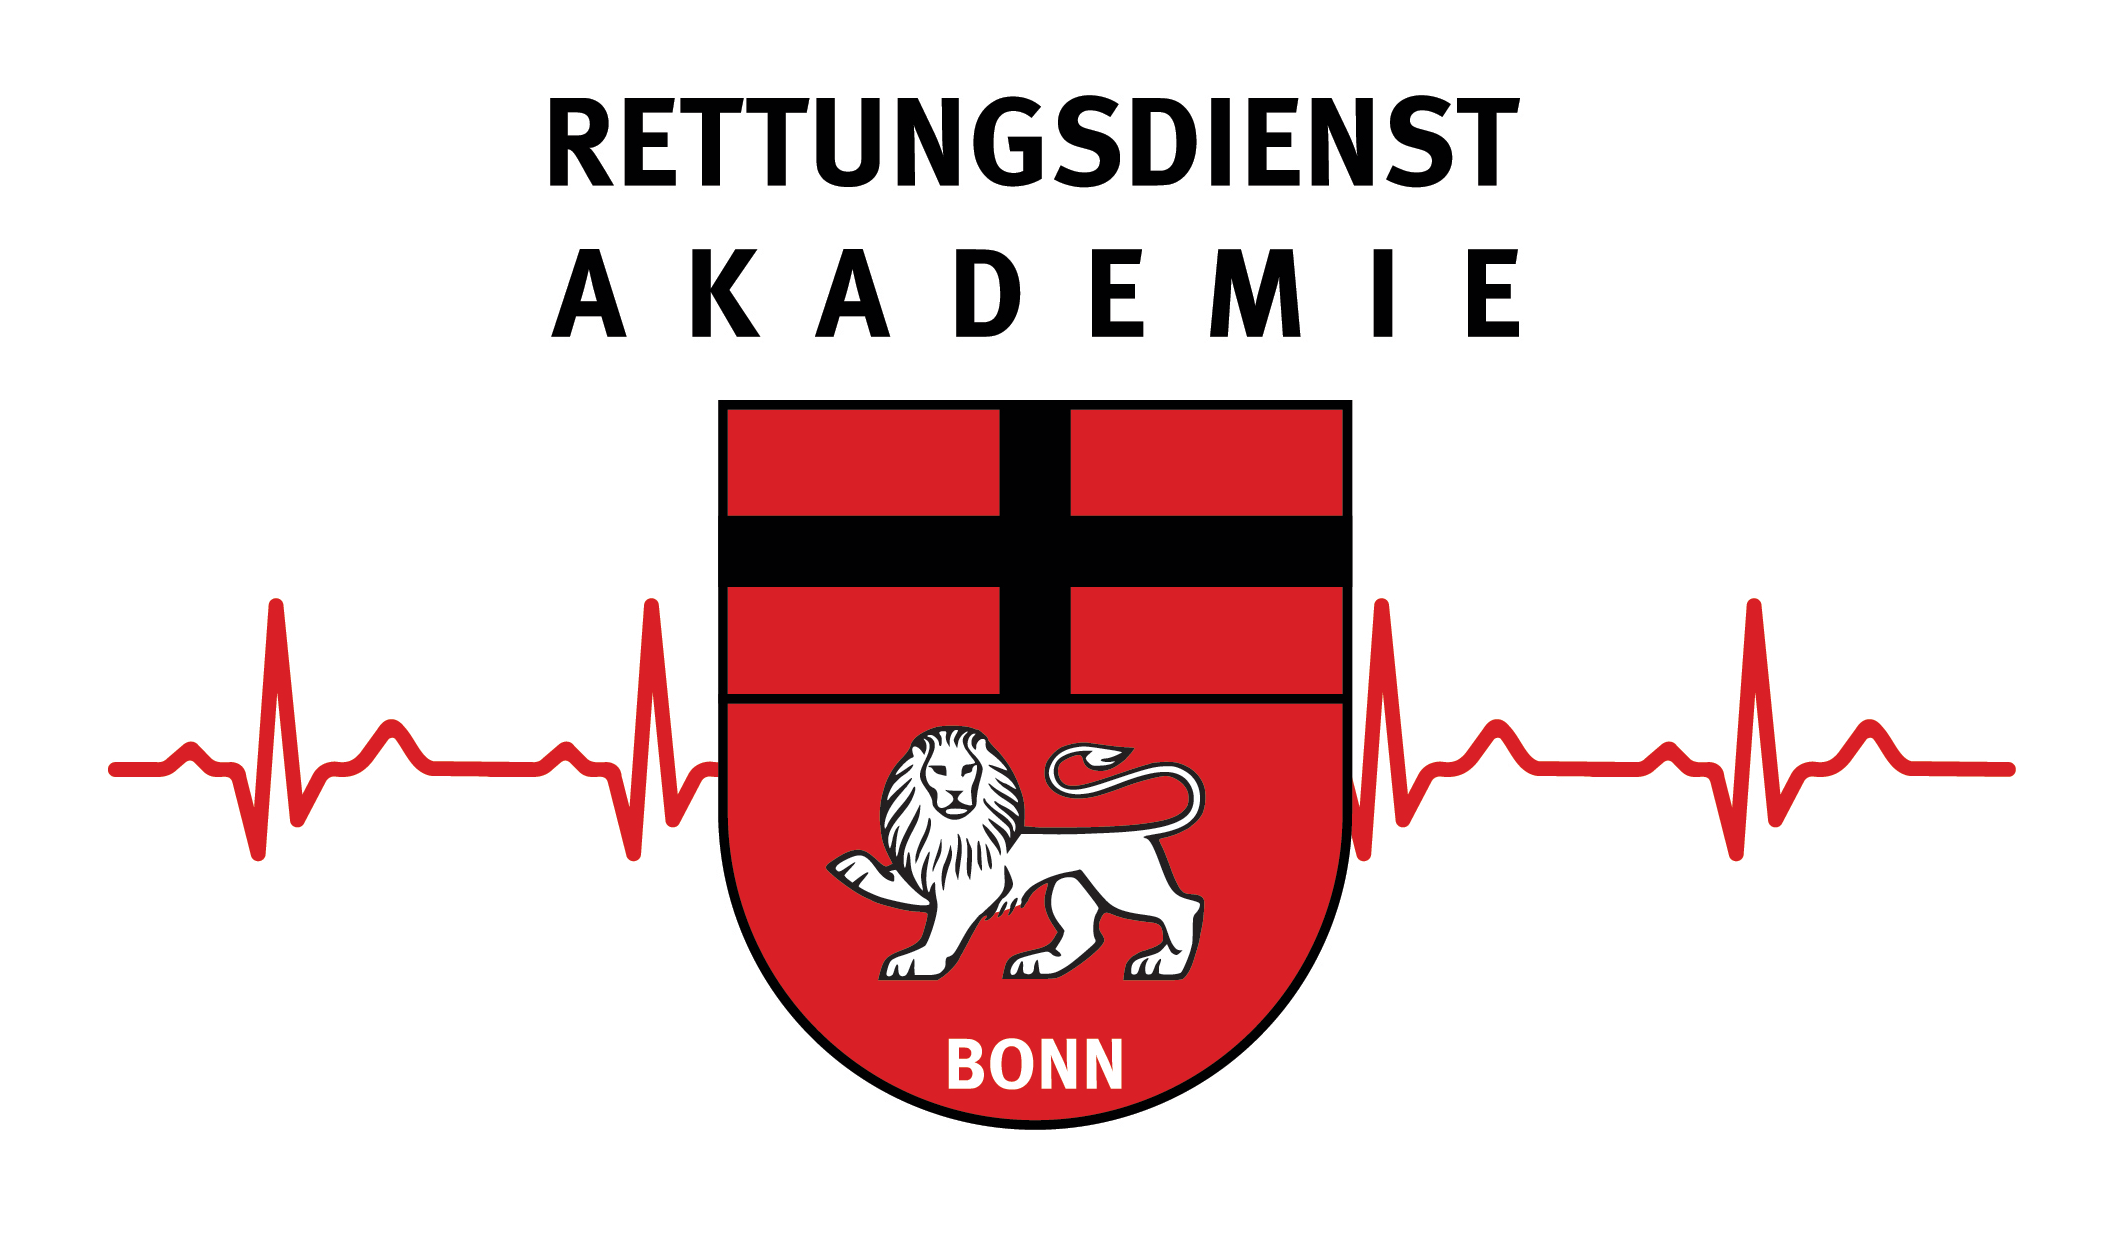 Rettungsdienst-Akademie Bonn Logo/Wappen